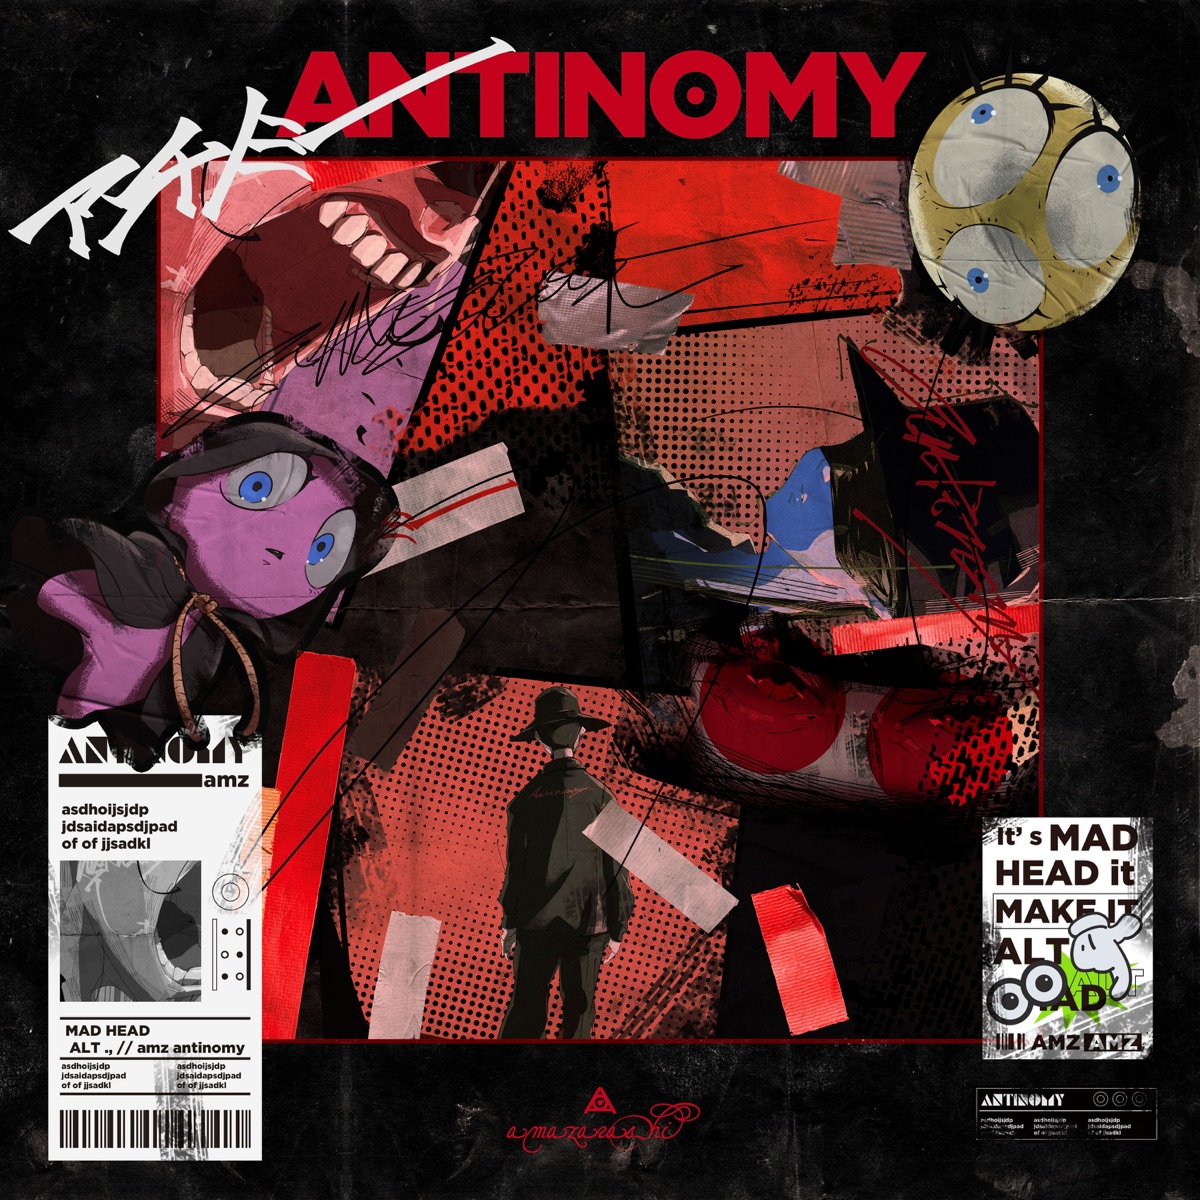 Cover art for『amazarashi - アンチノミー』from the release『antinomy